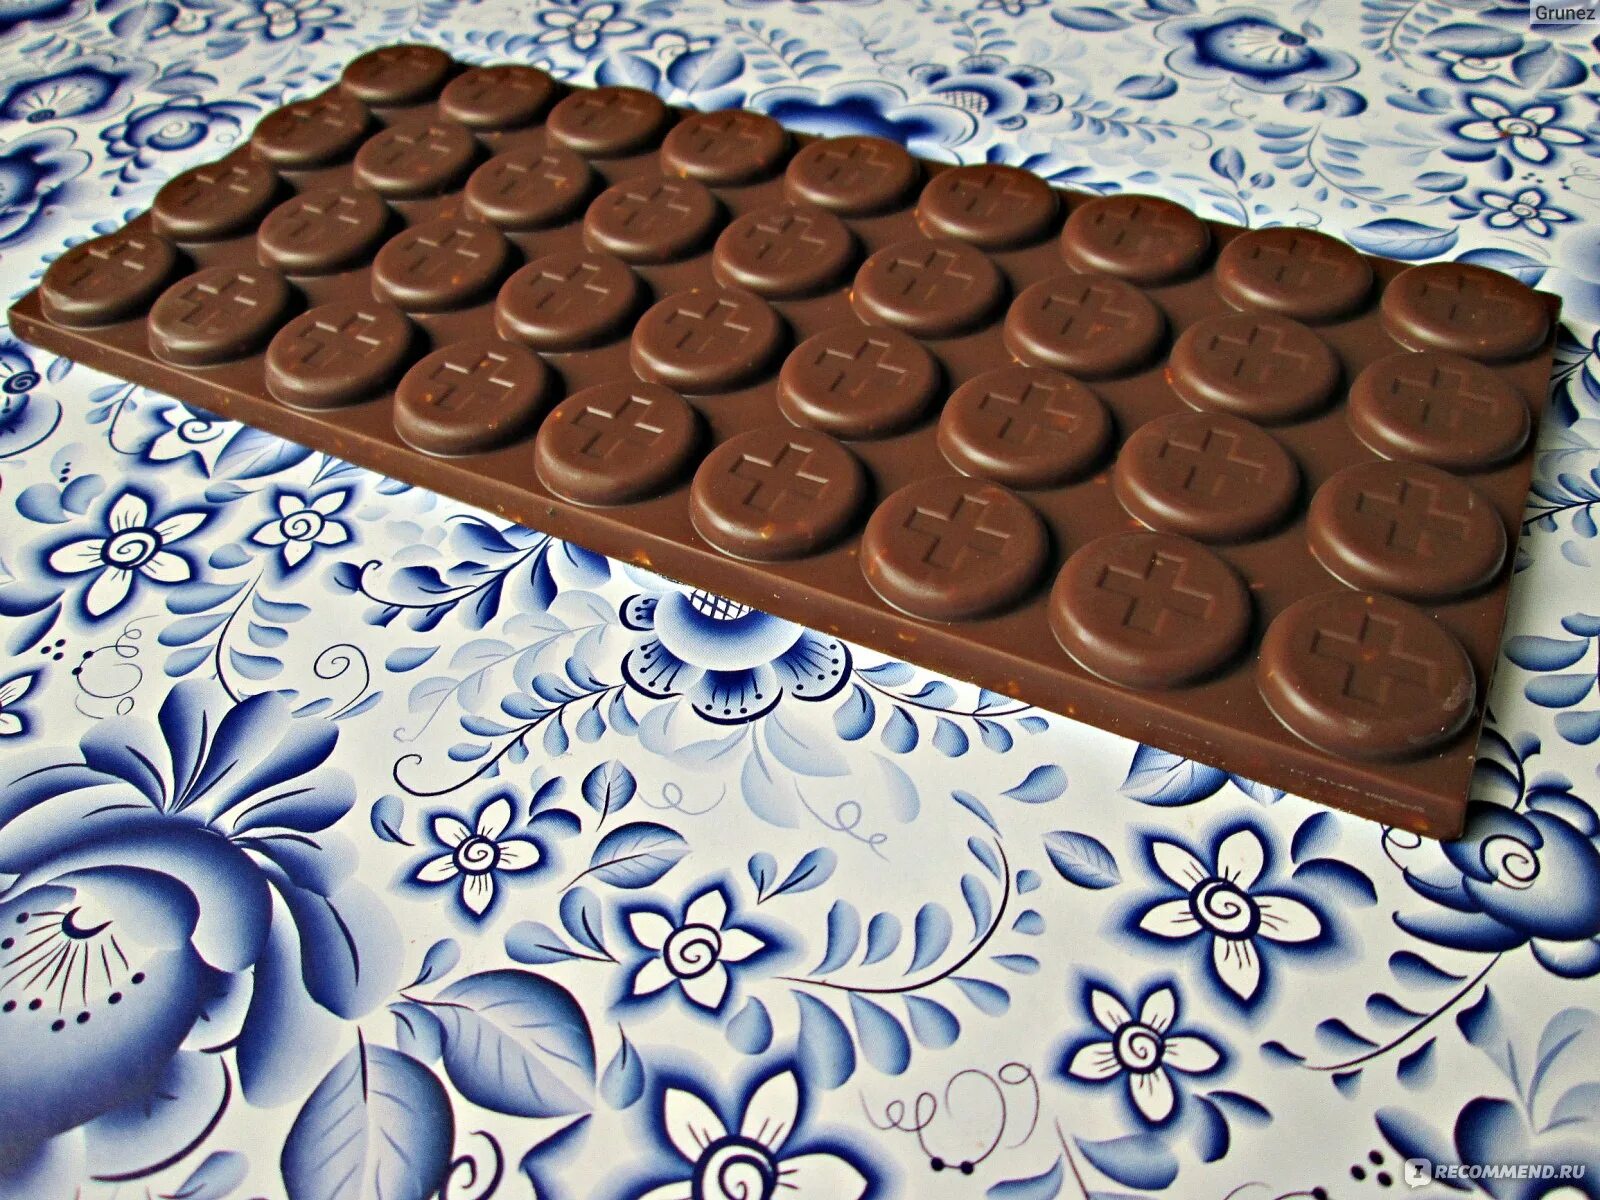 Малочный ШИКОЛАД одна штучка. Шоколад с фисташками реклама. Maczione nis3-1 шоколад. Пикник фото шоколада 1кг. Шоколадка за 1 рубль